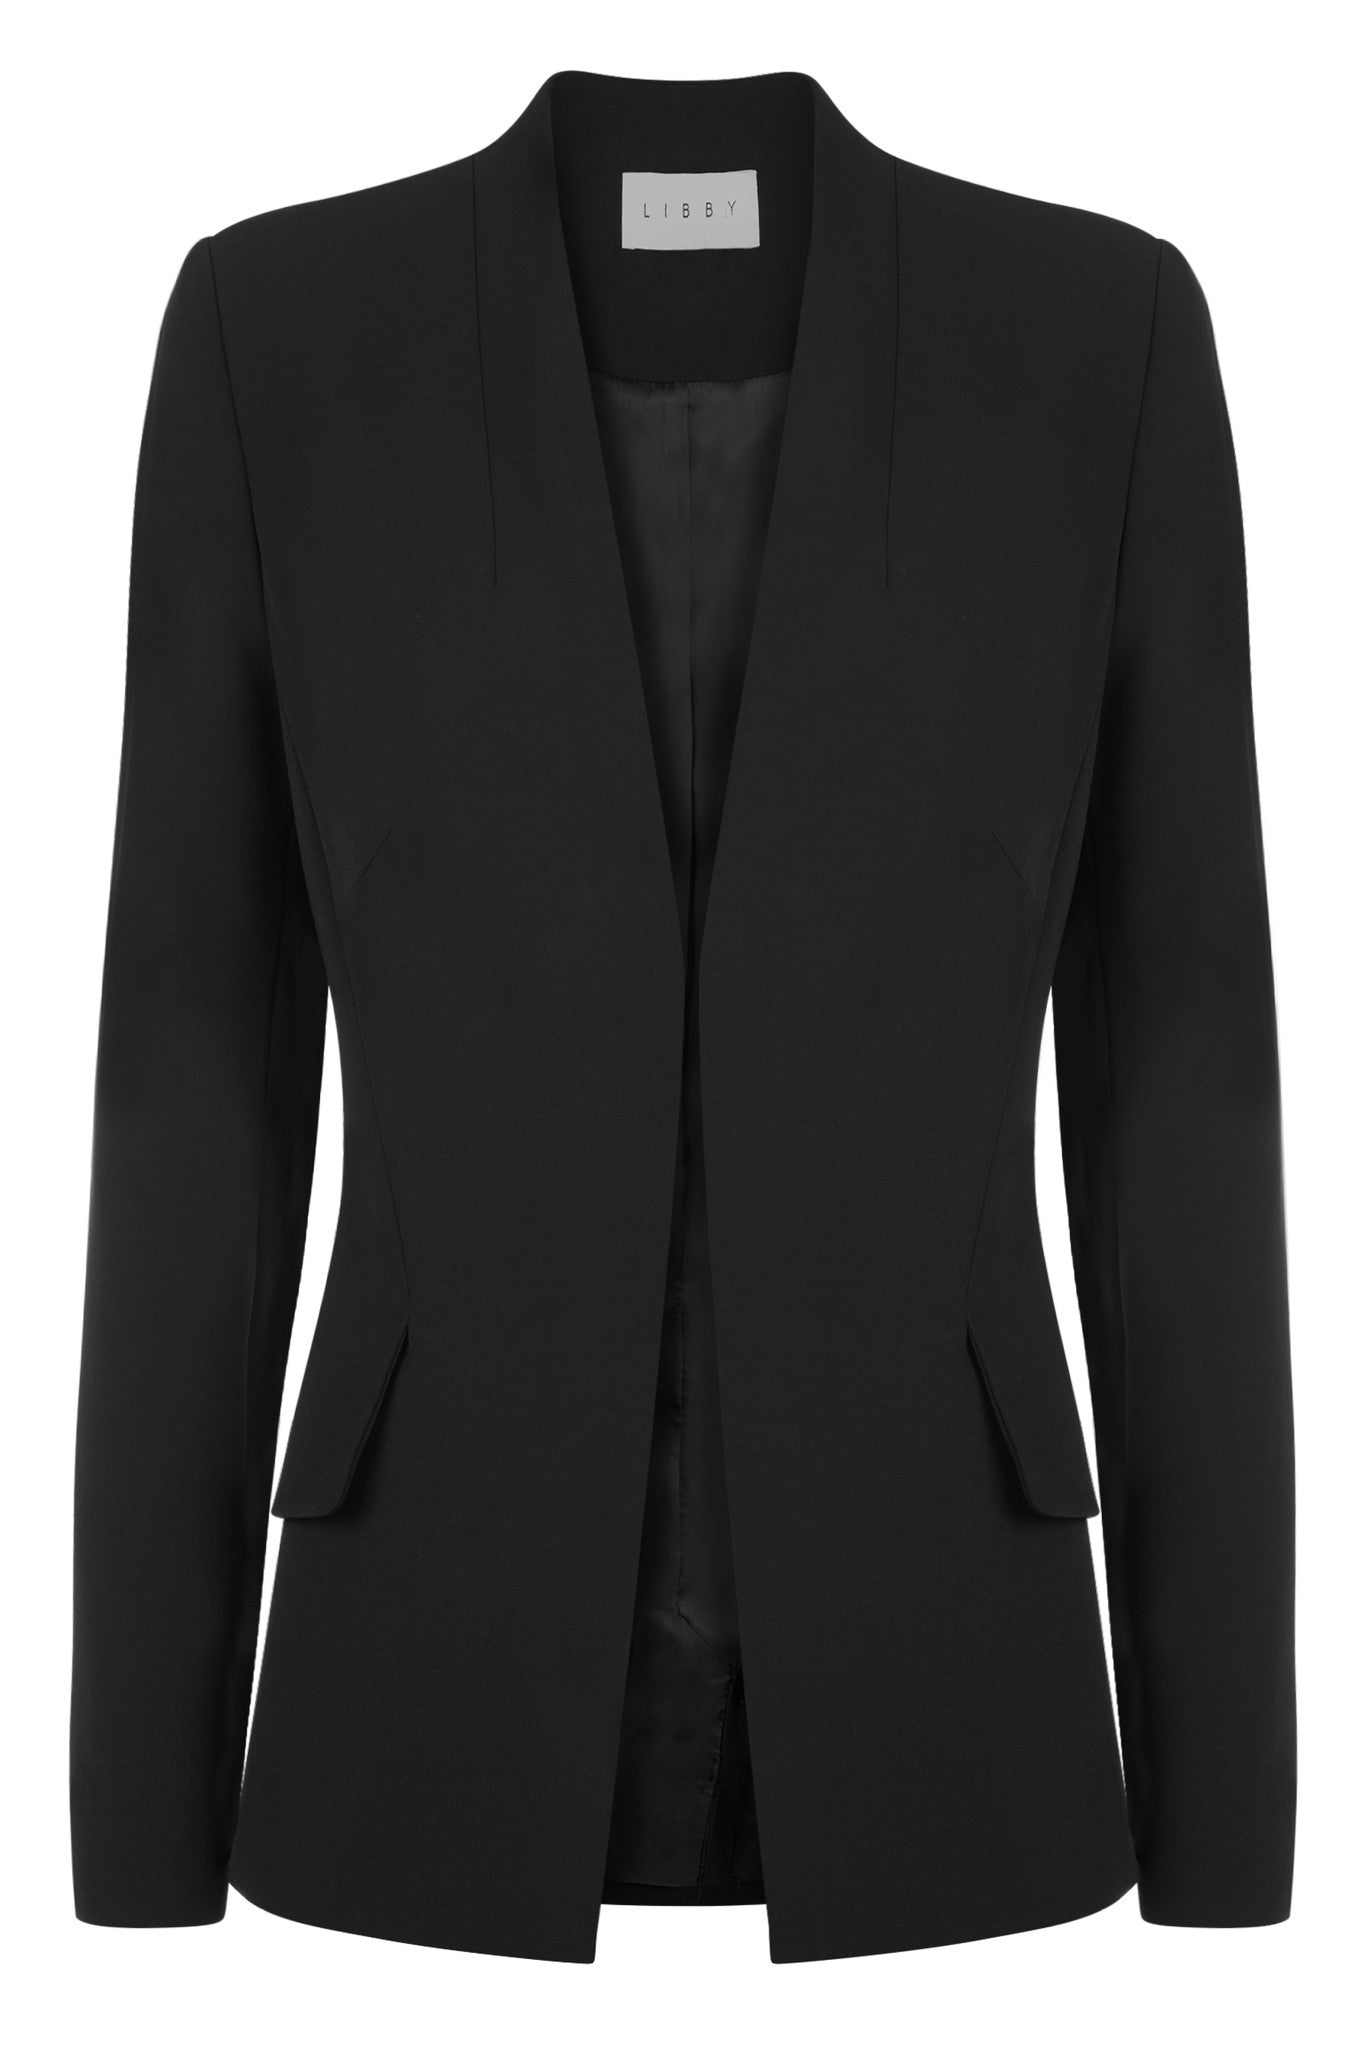 Westminster Black Suiting Jacket